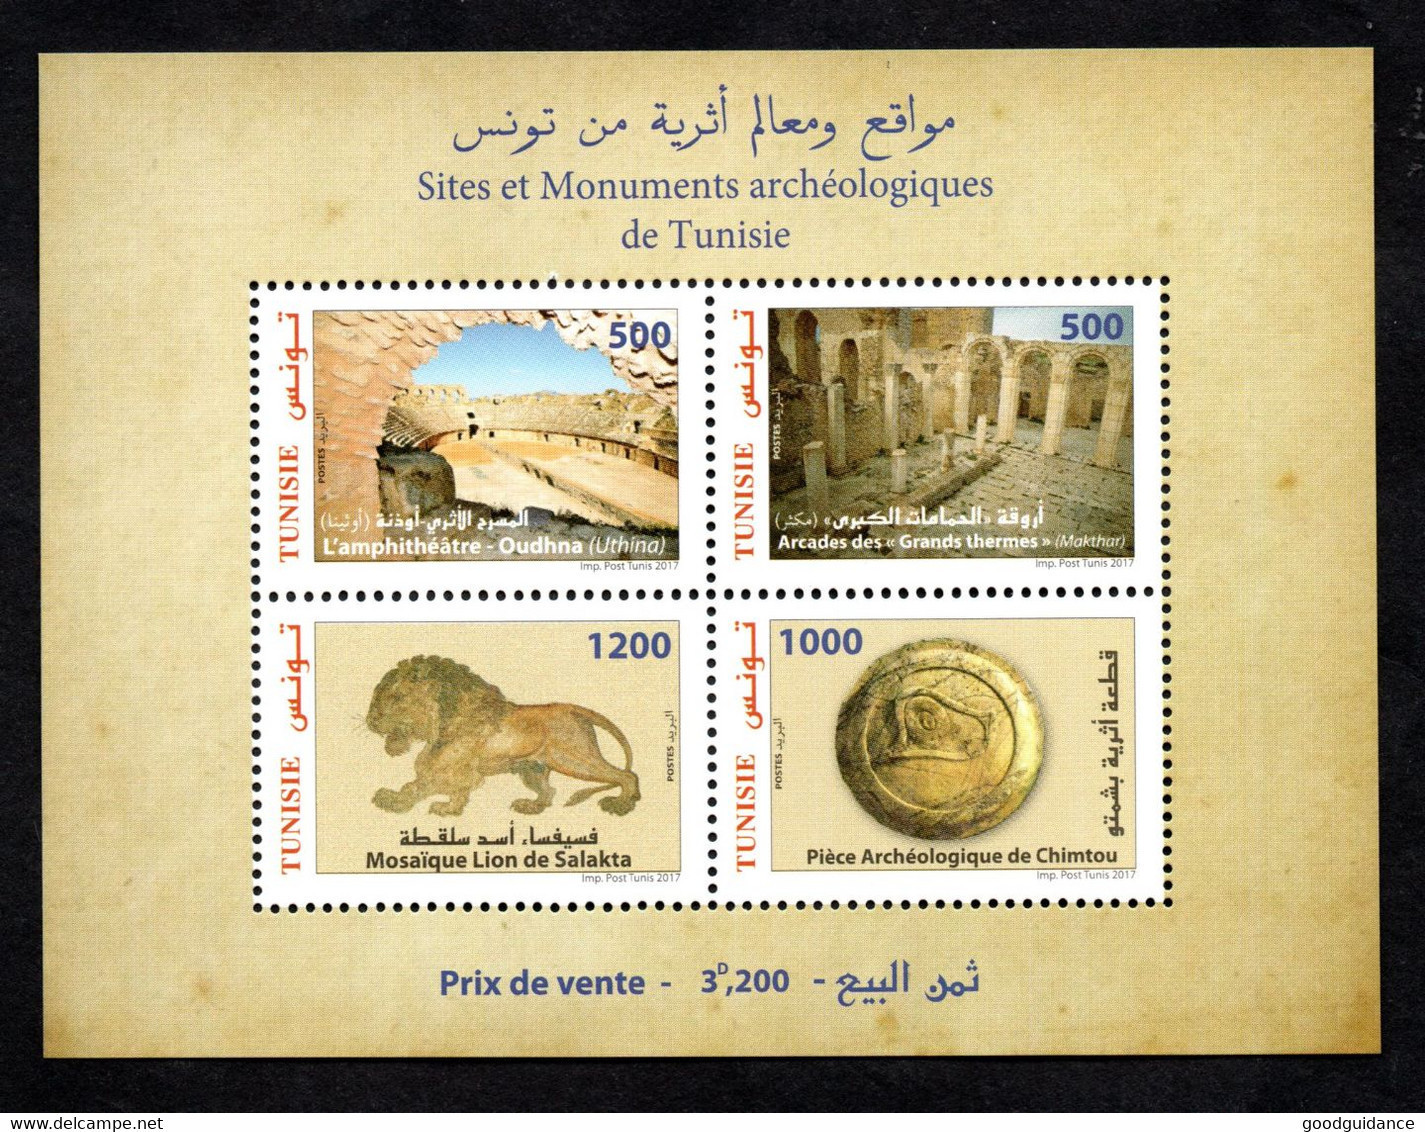 2017- Tunisia- Tunisie- Archeological Sites And Monuments- Sites Et Monuments Archéologiques- Minisheet - Bloc- MNH** - Tunisia (1956-...)